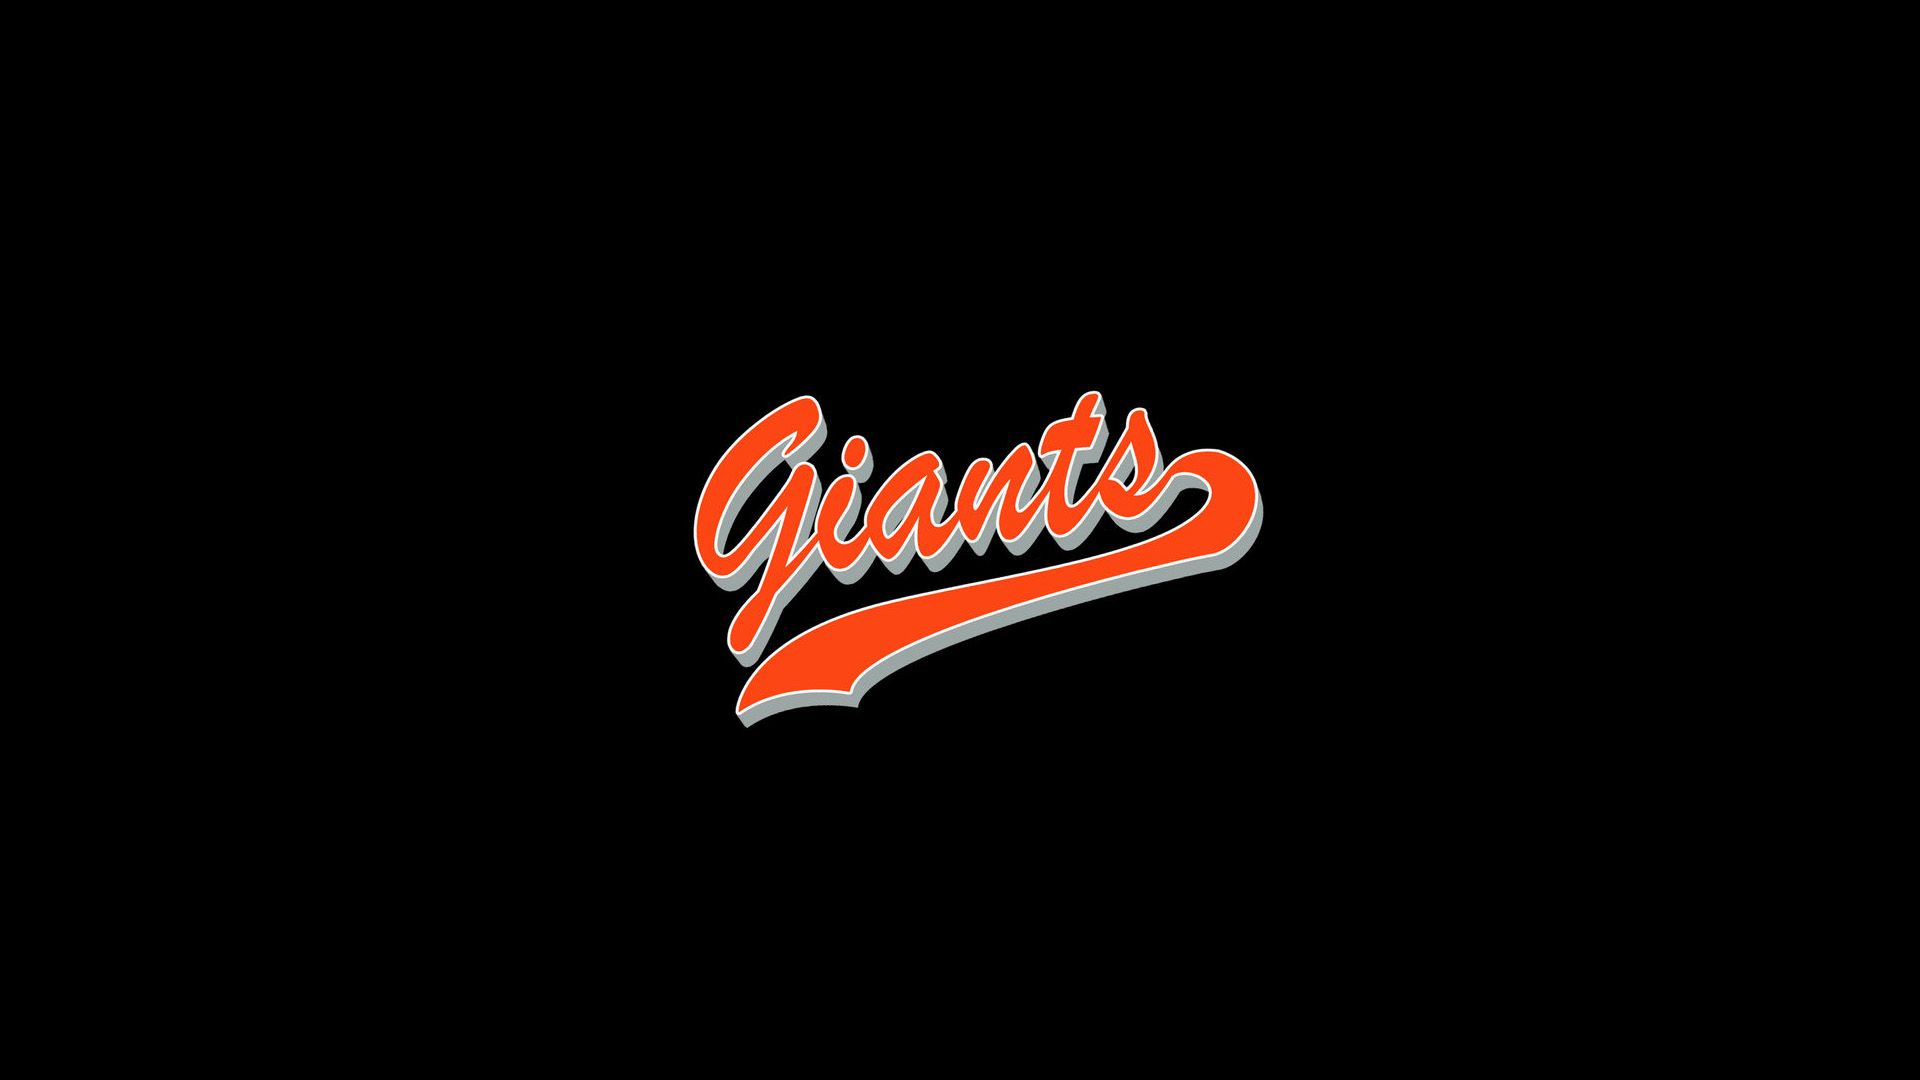 Giants Baseball Wallpaper (62+ images)